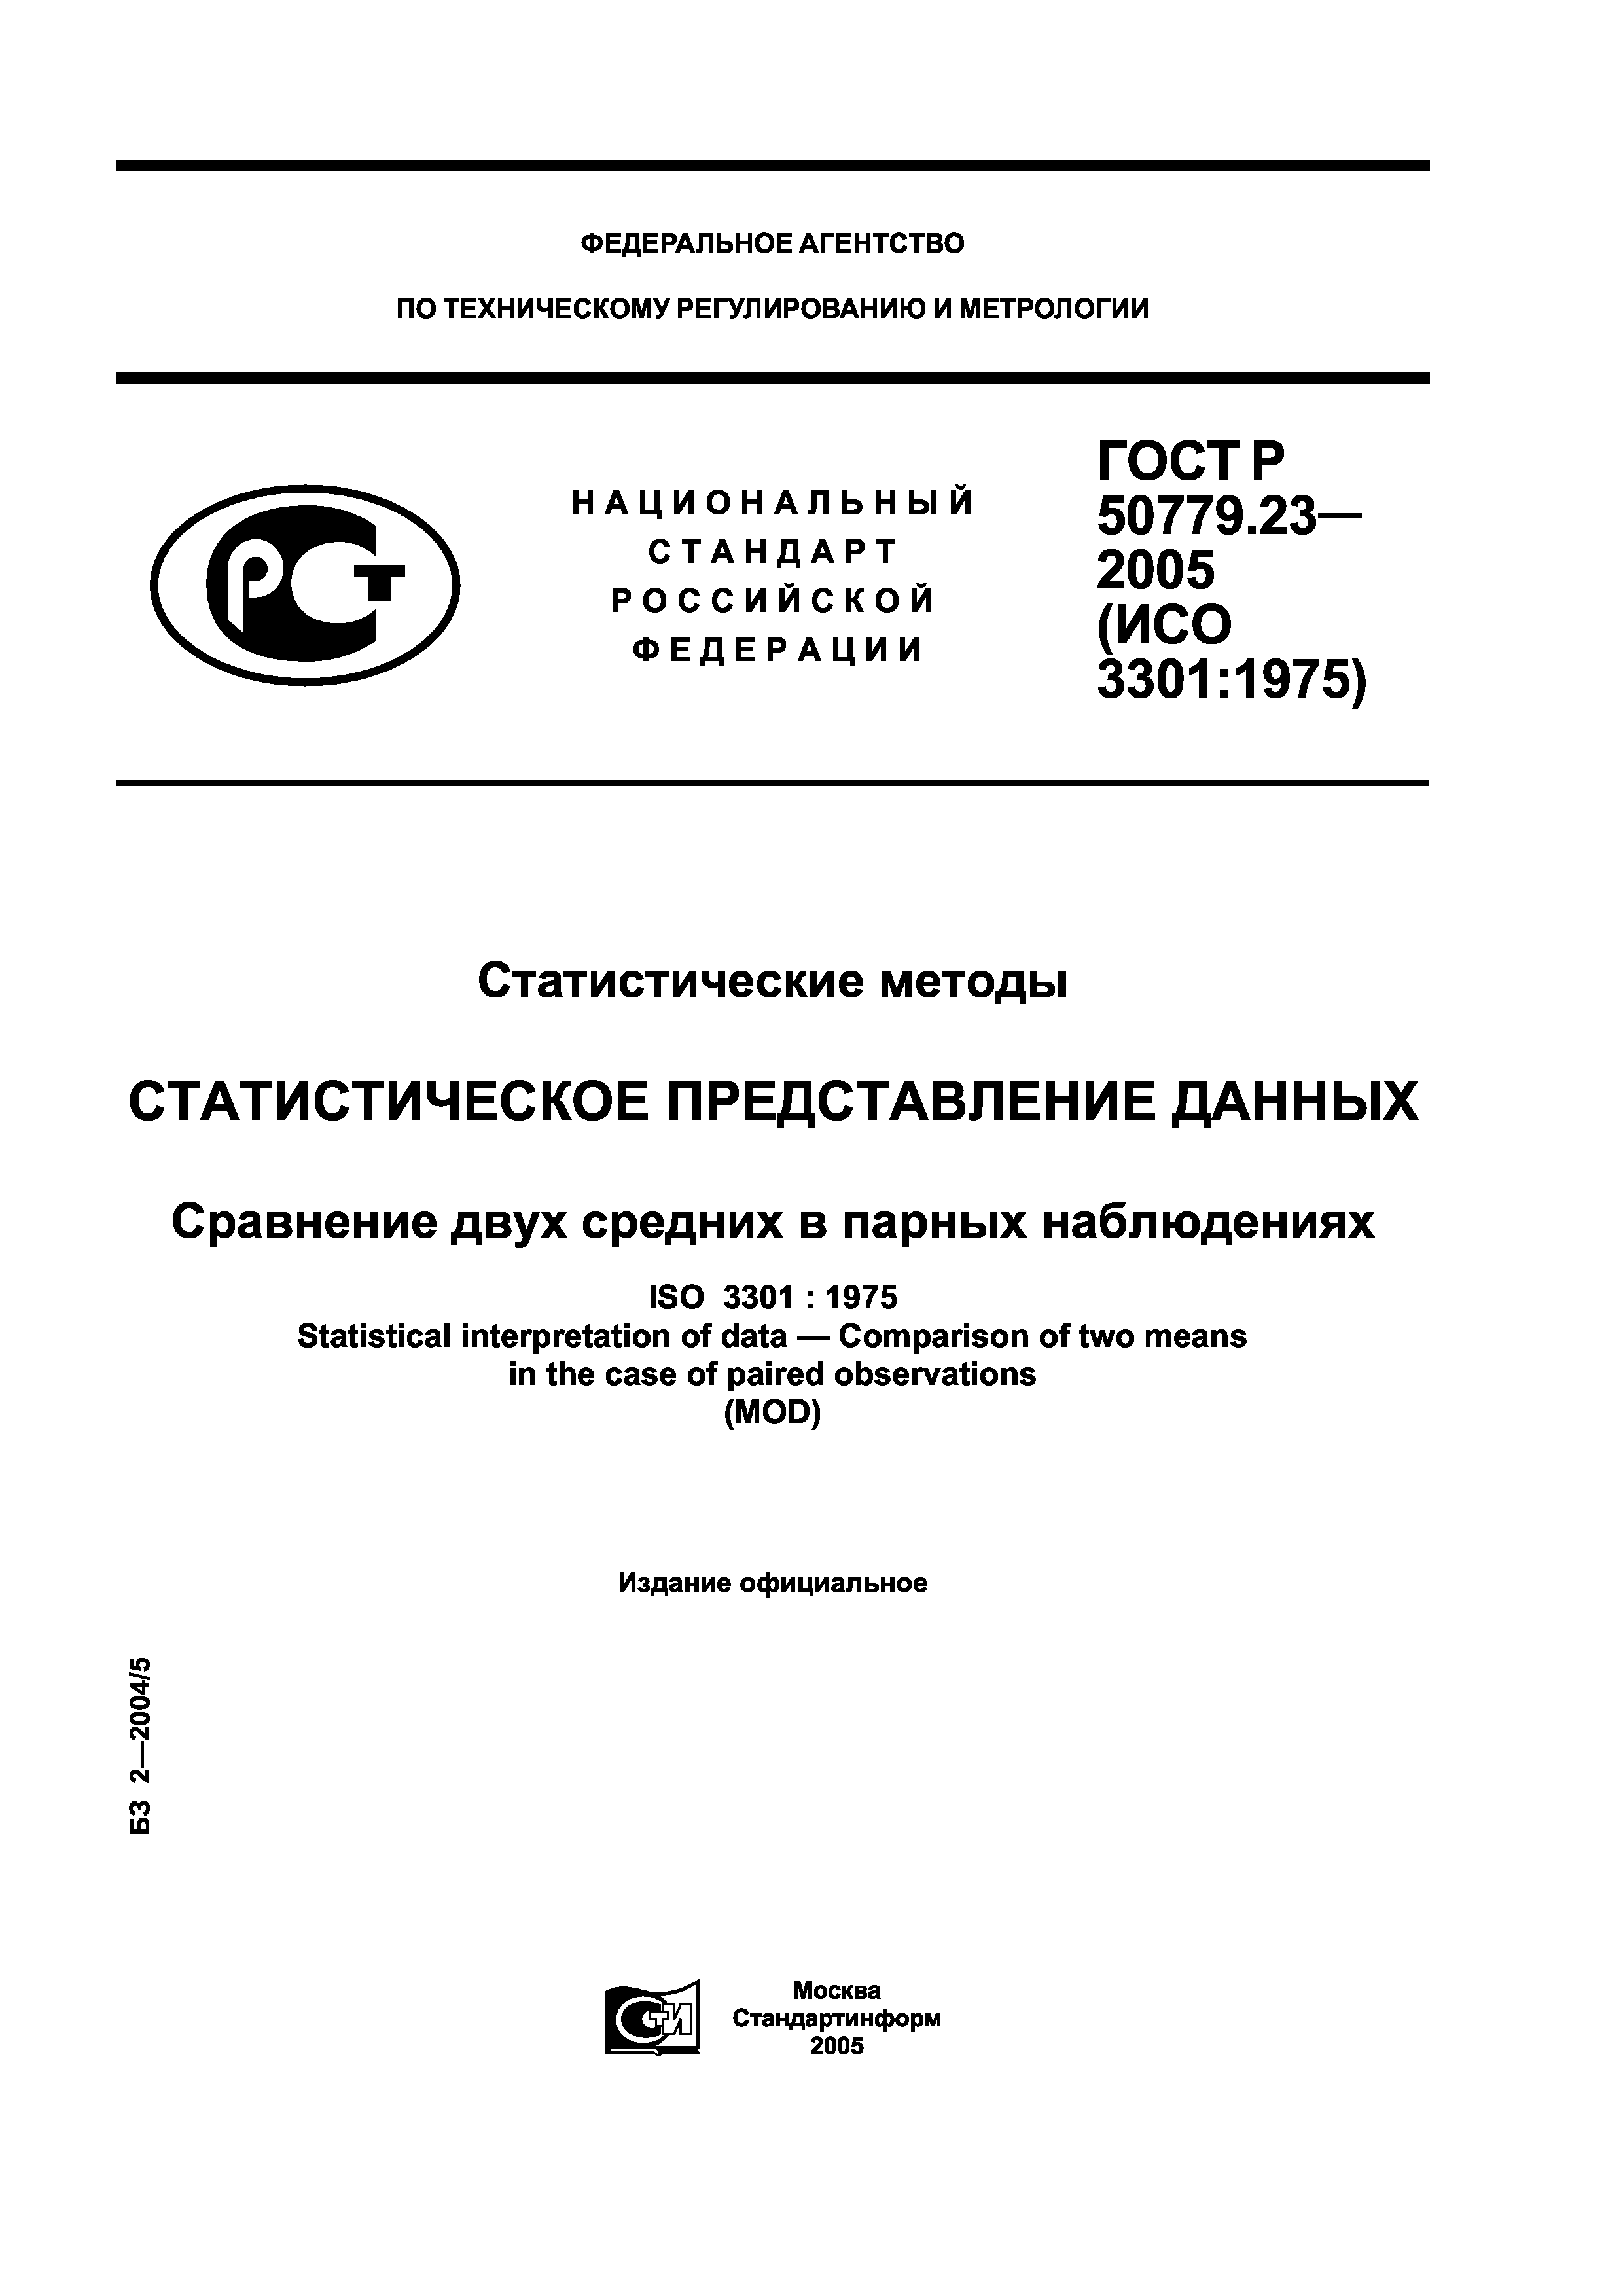 ГОСТ Р 50779.23-2005